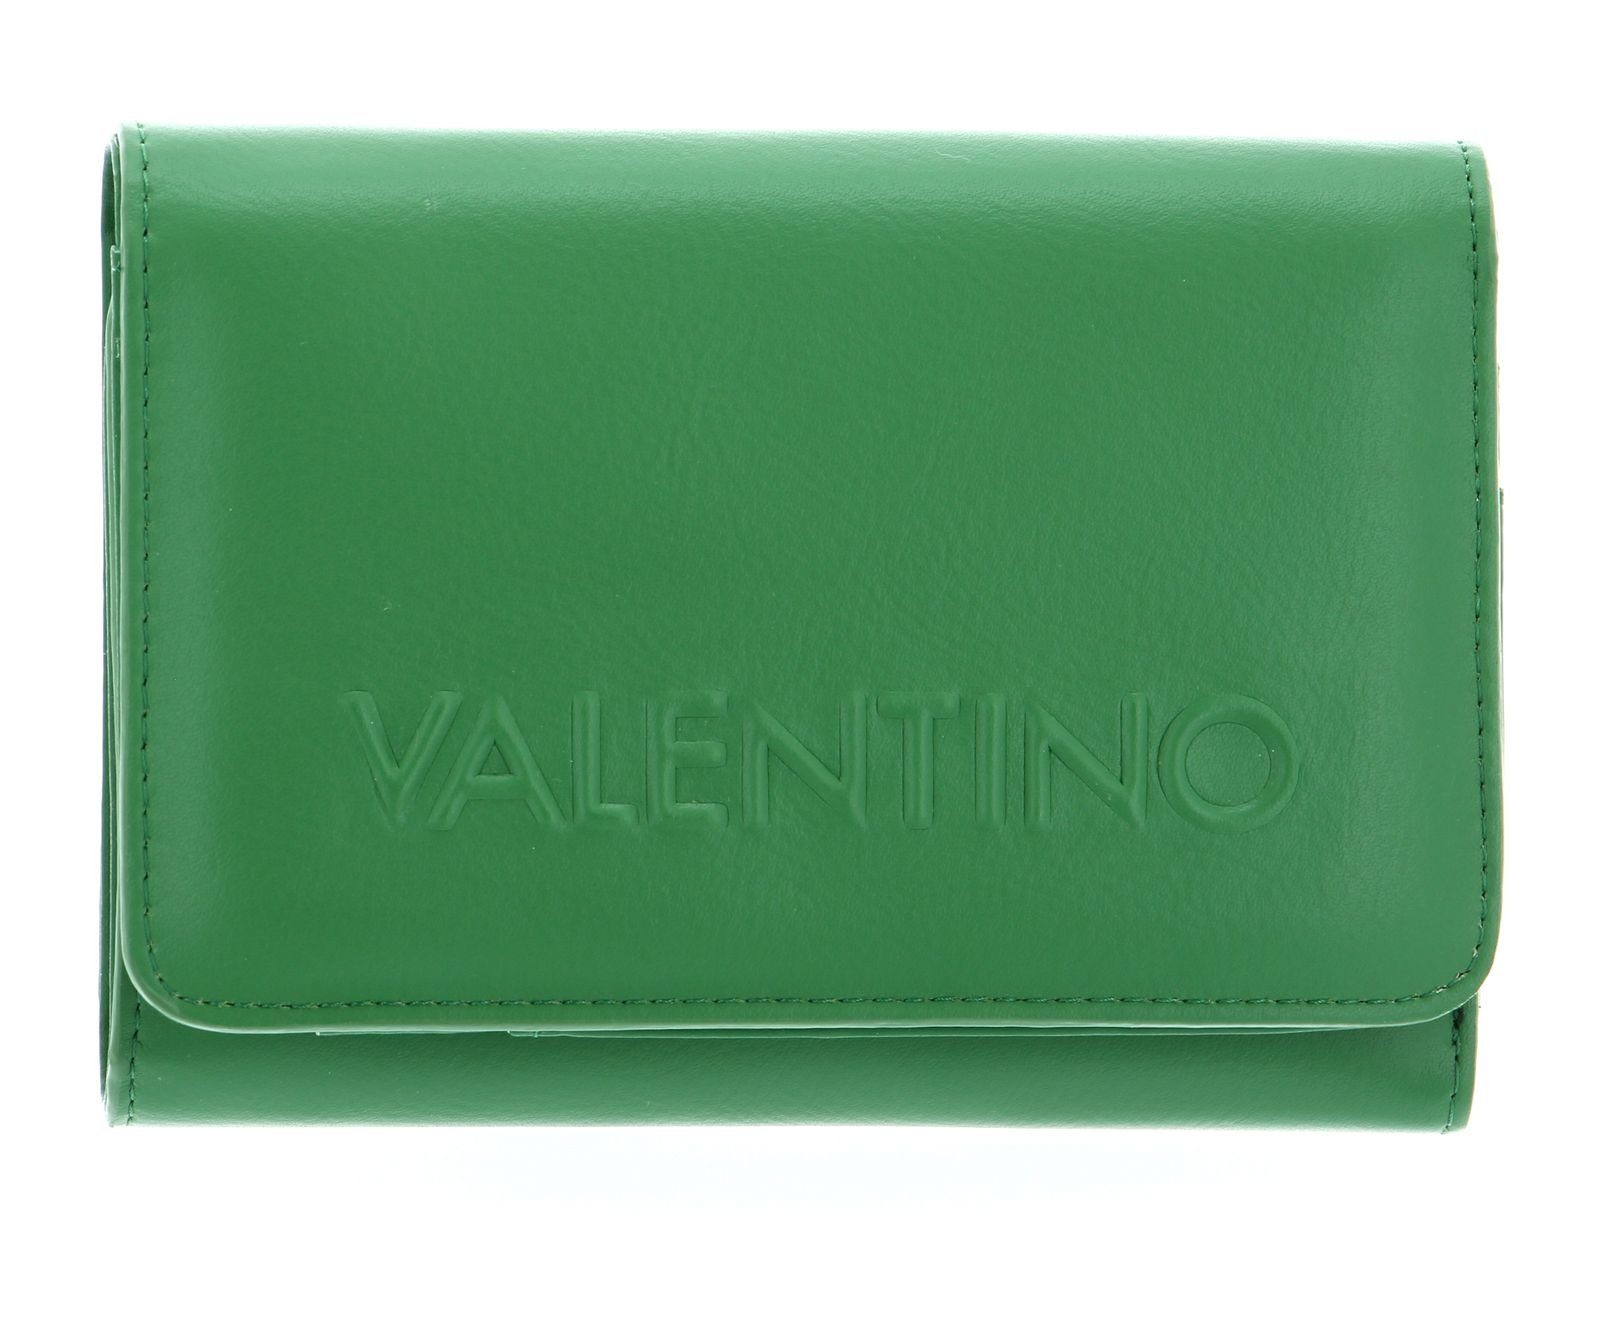 VALENTINO Re Verde BAGS Geldbörse Holiday